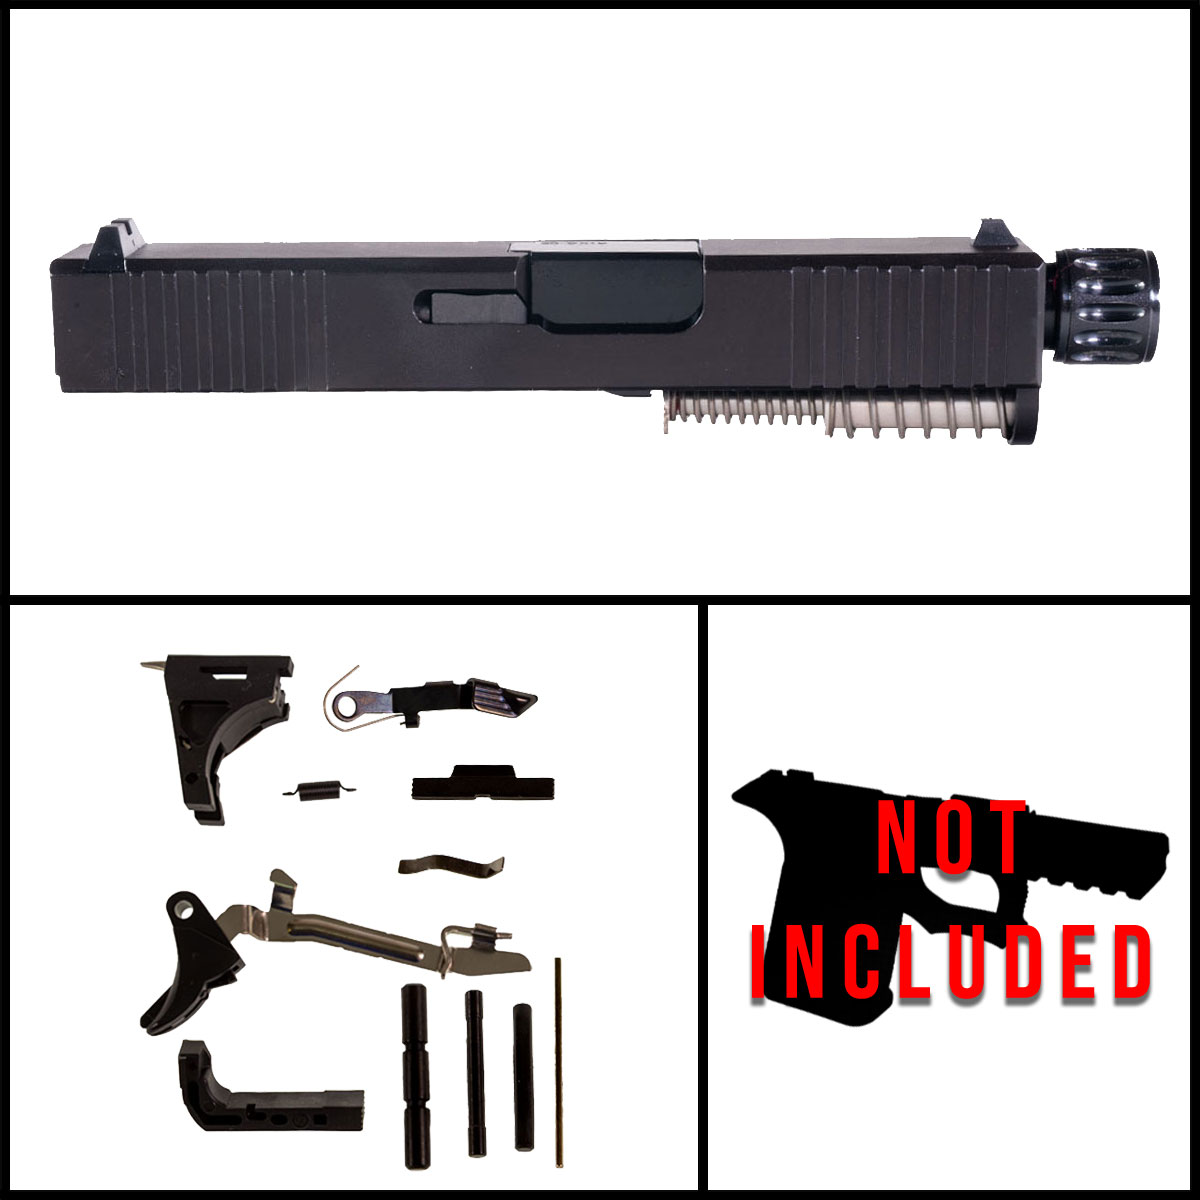 MMC 'Snub Nose' 9mm Full Pistol Build Kit (Everything Minus Frame) - Glock 26 Gen 1-2 Compatible